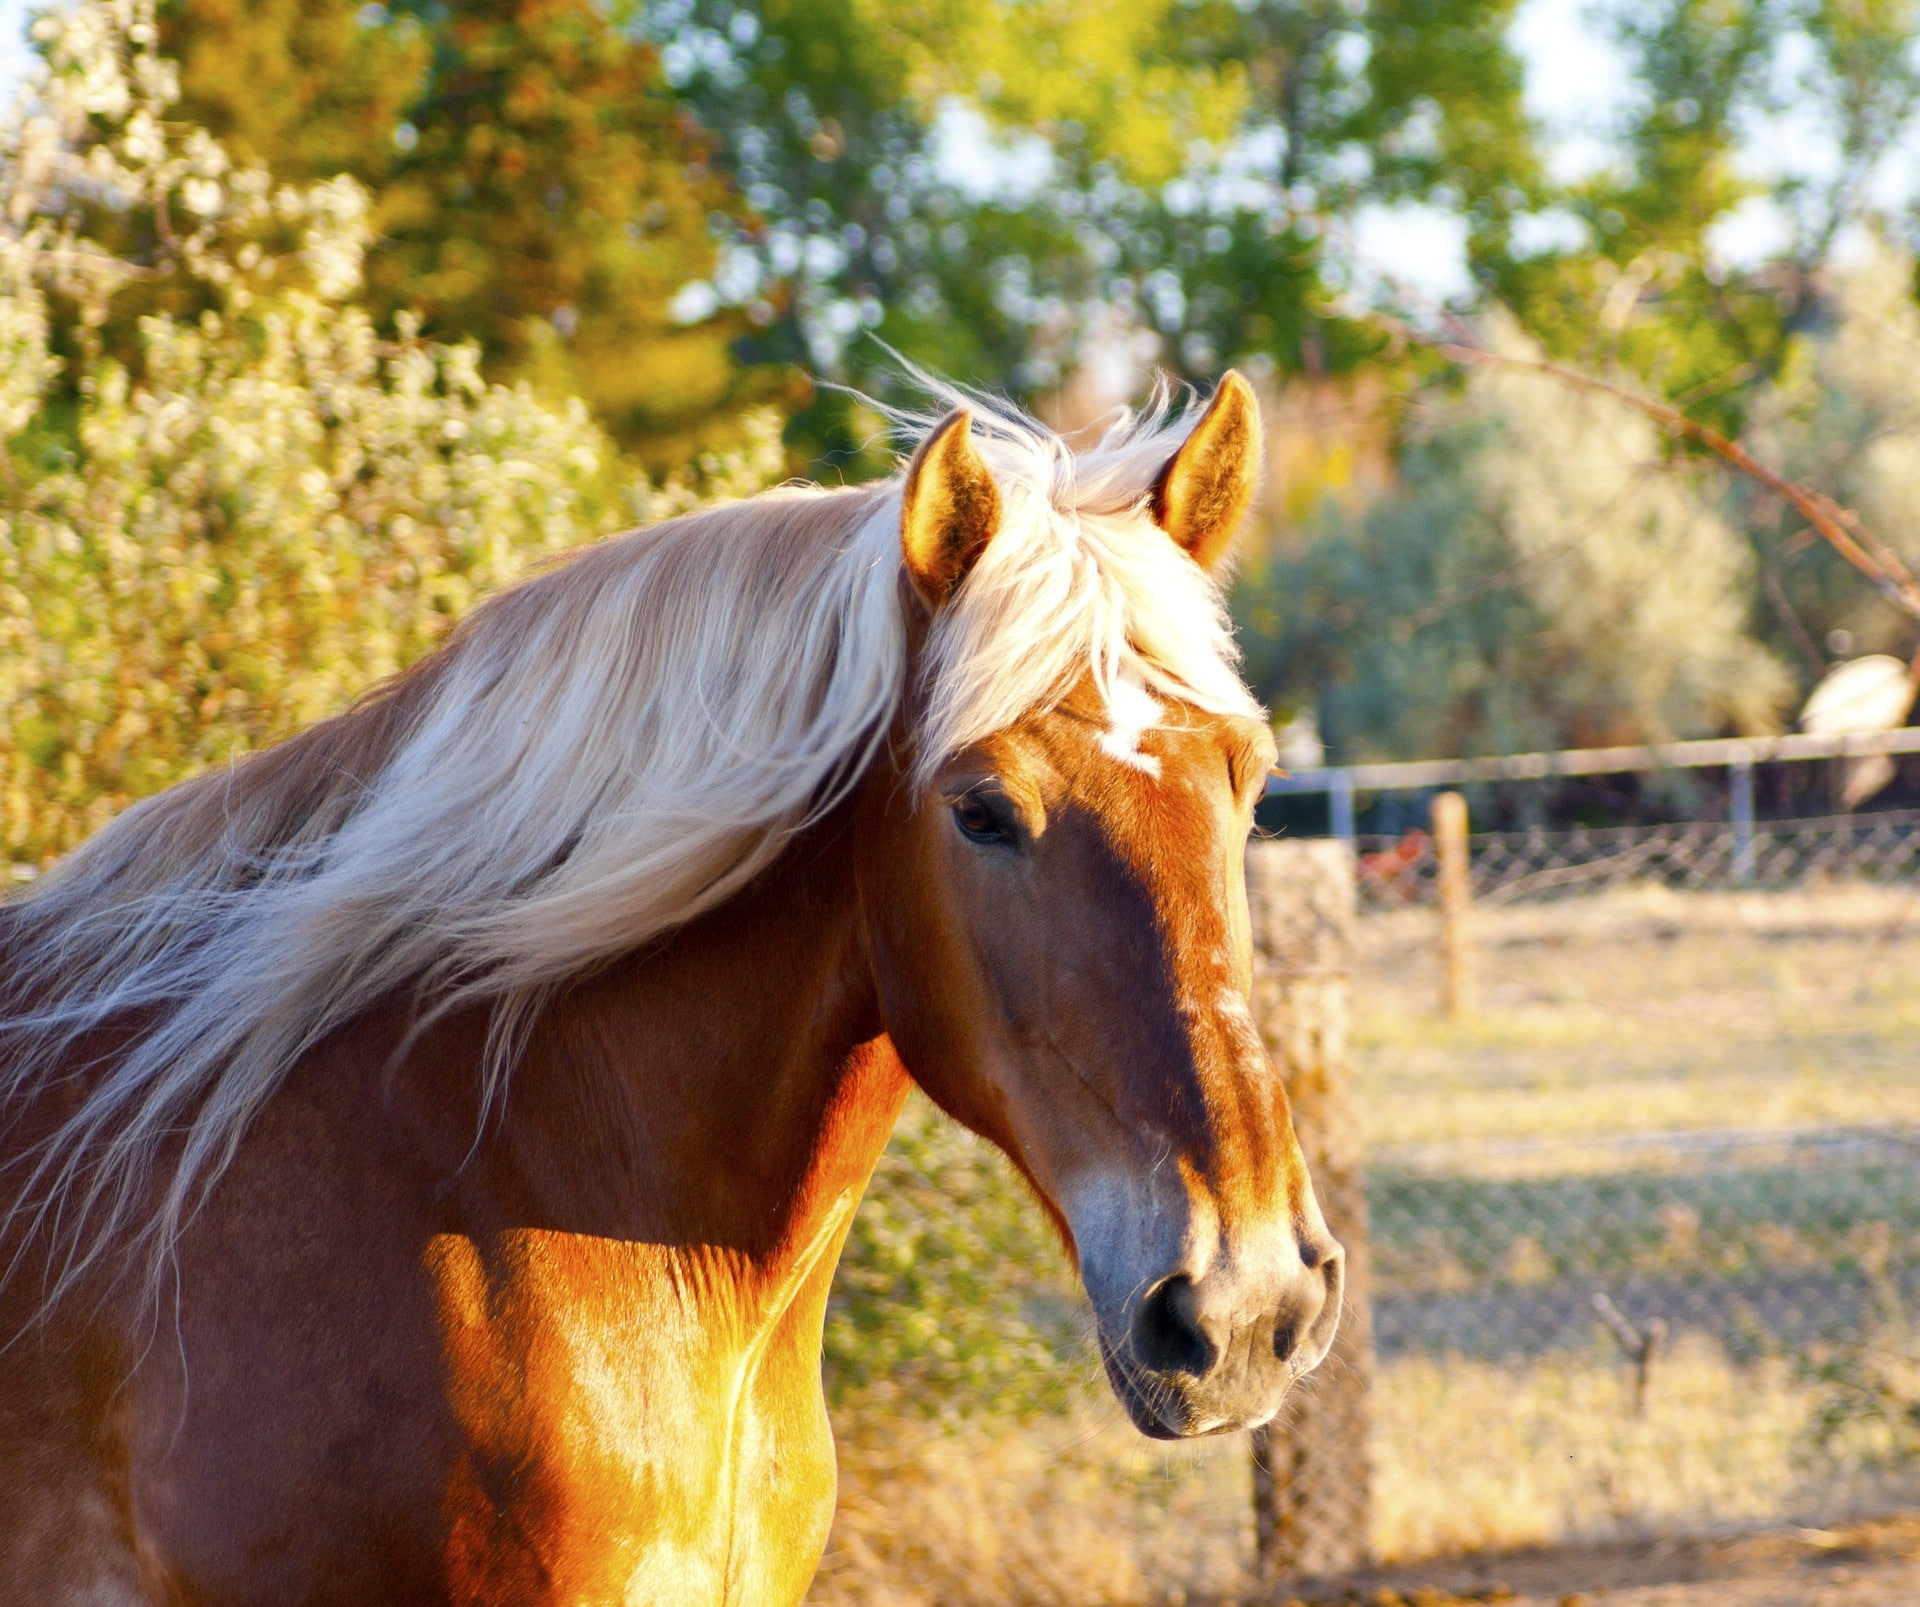 Horse Breeds- The Percheron